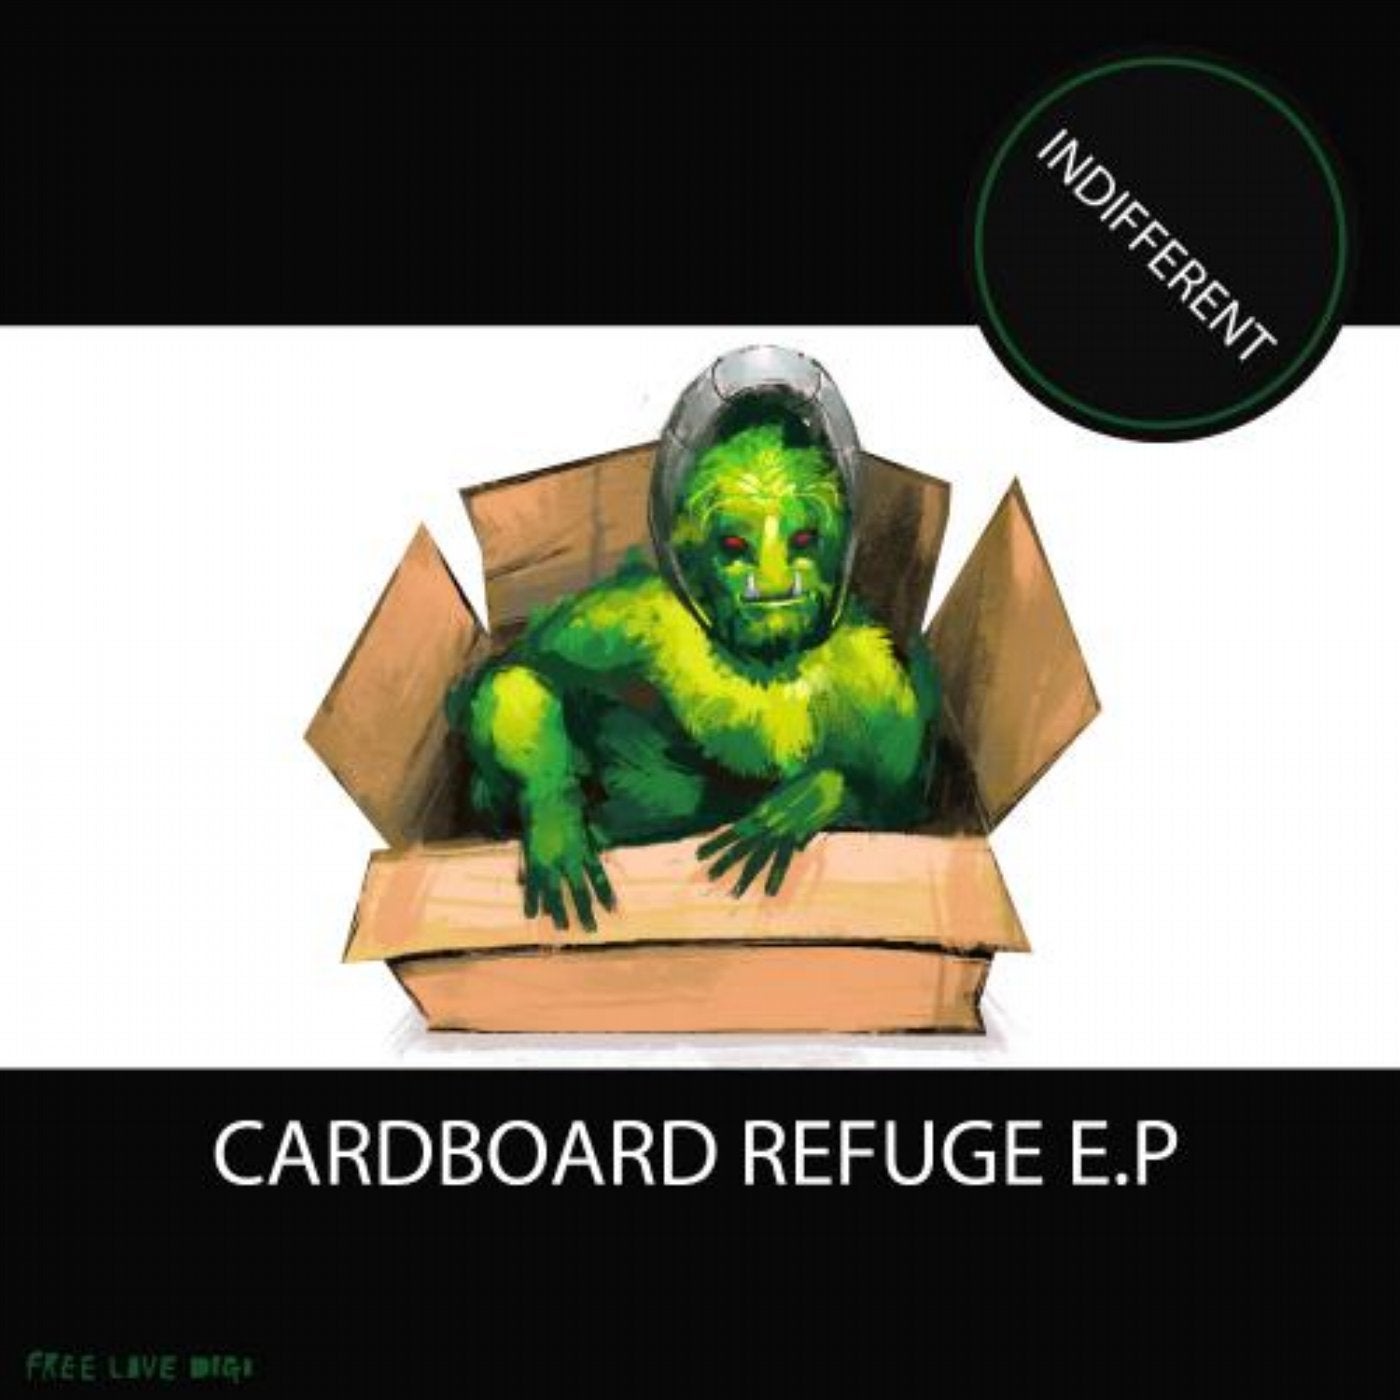 Cardboard Refuge E.P